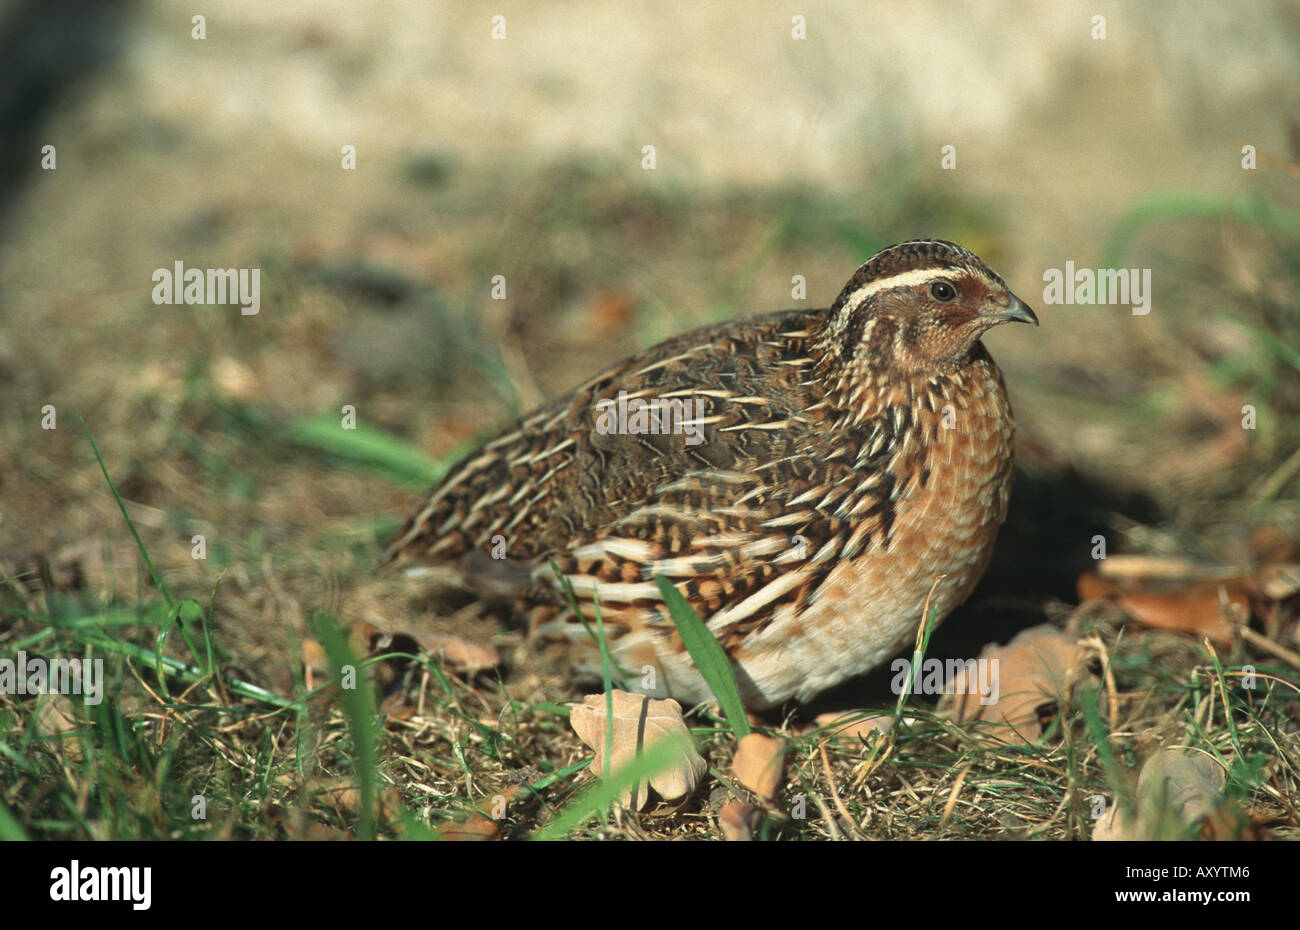 common quail (Coturnix coturnix), hen Stock Photo